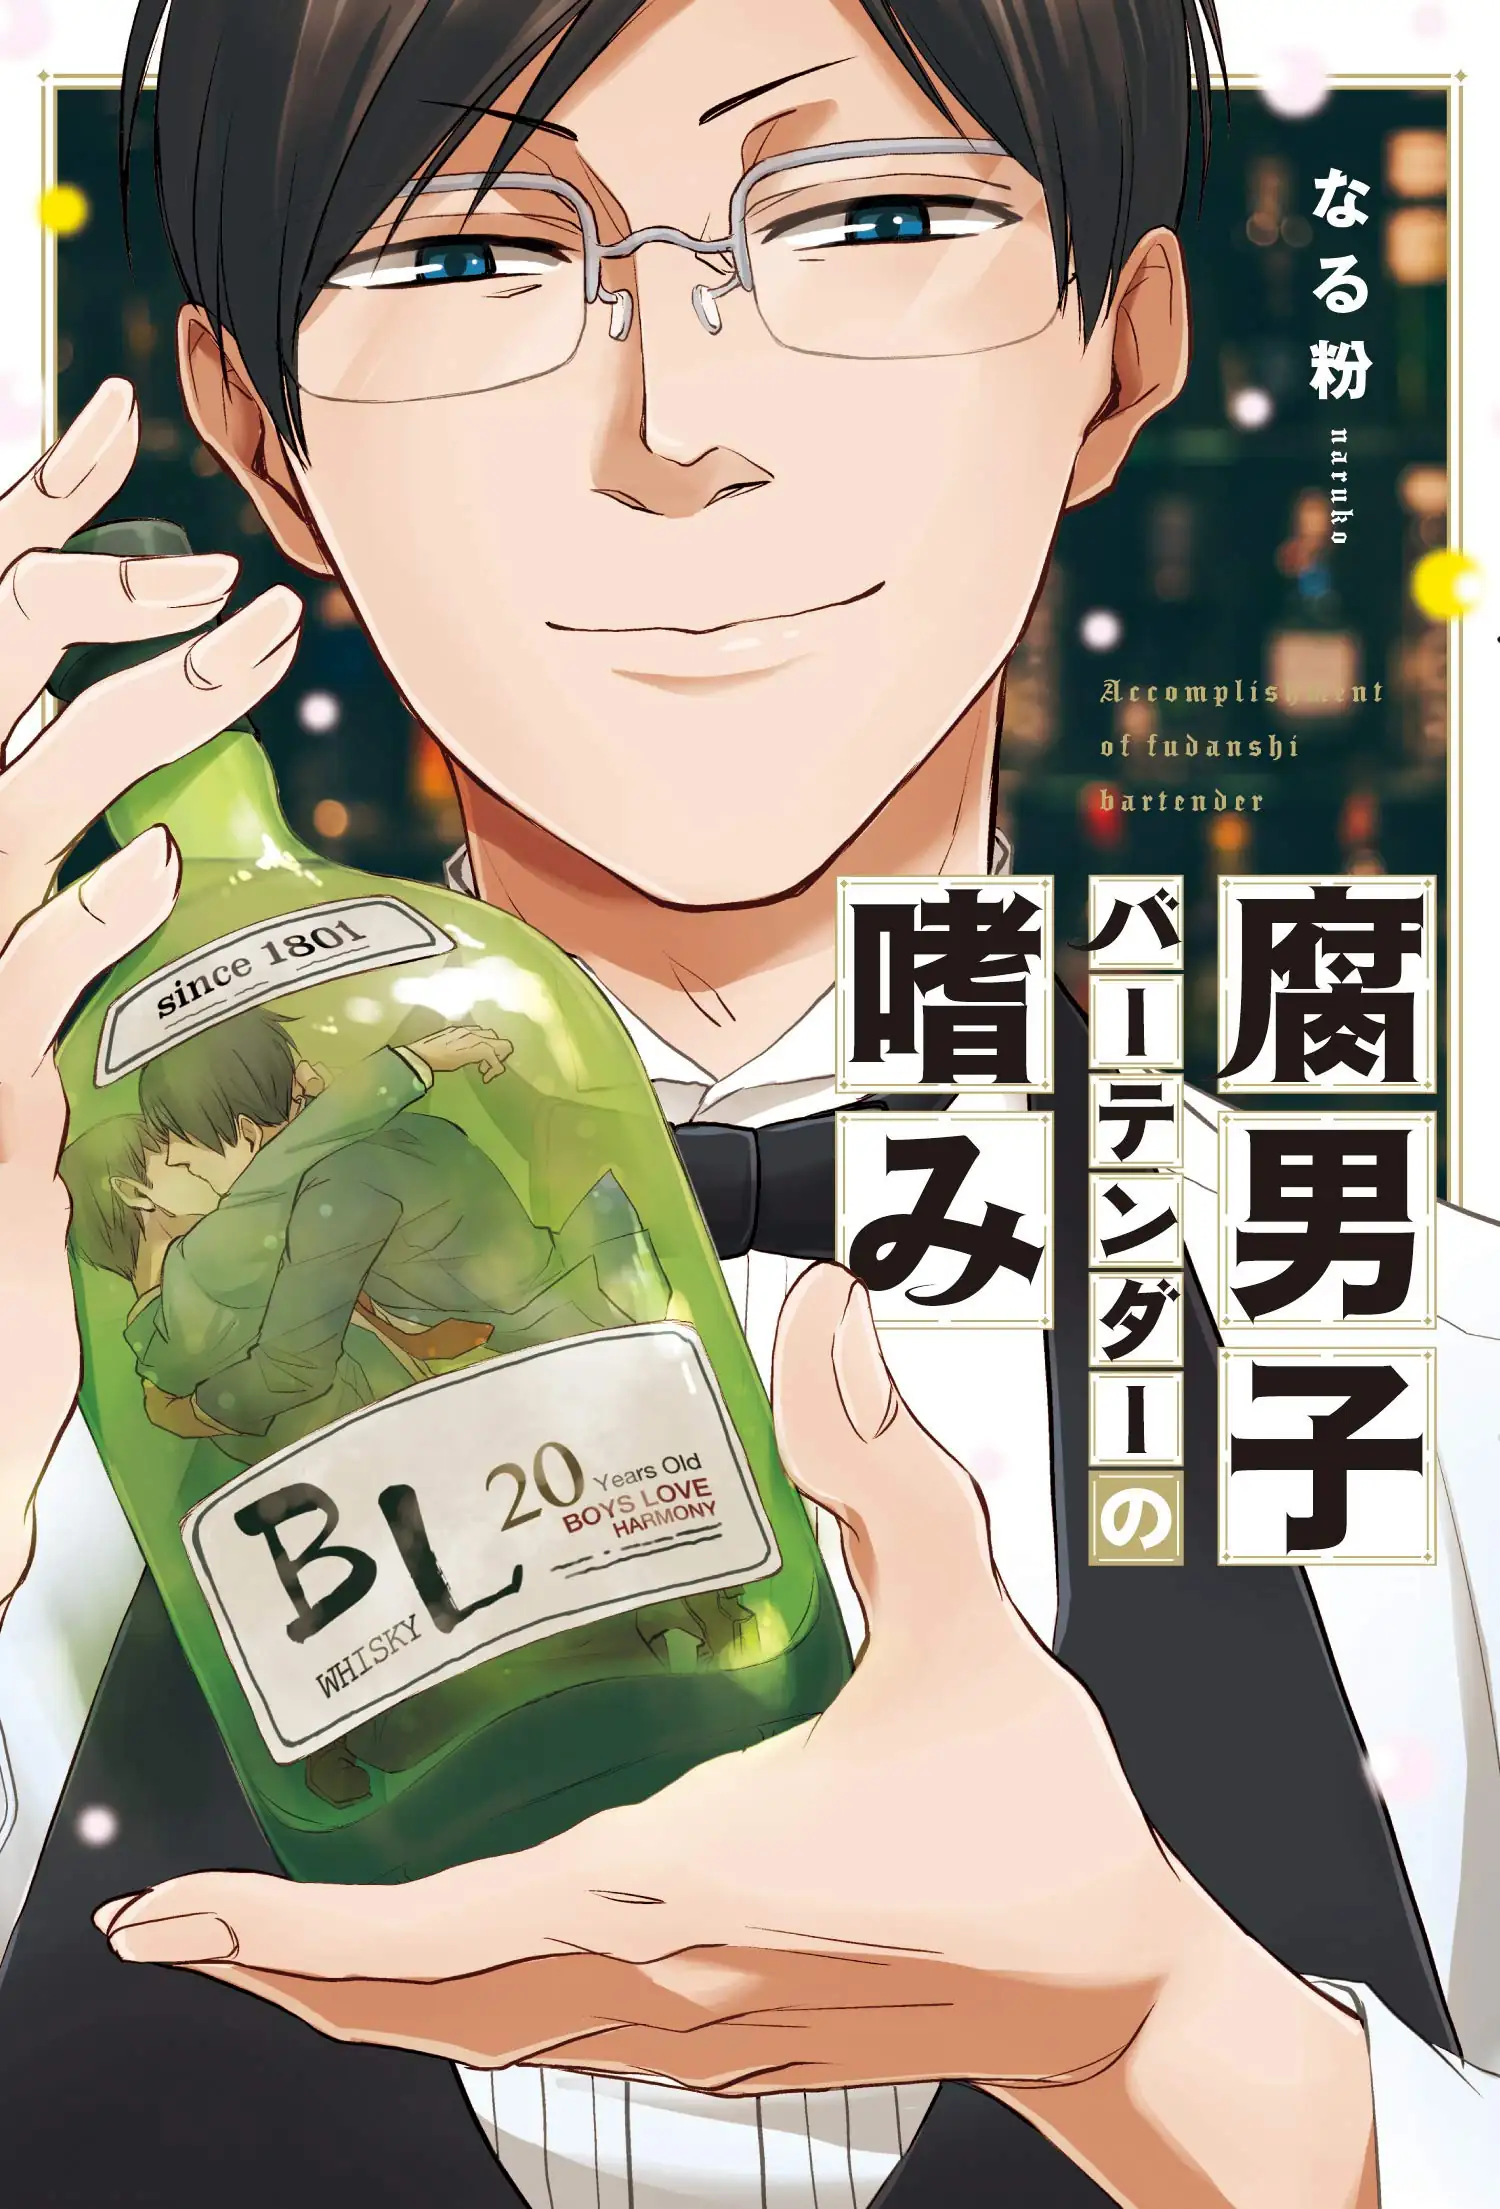 Cover for Fudanshi Bartender no Tashinami